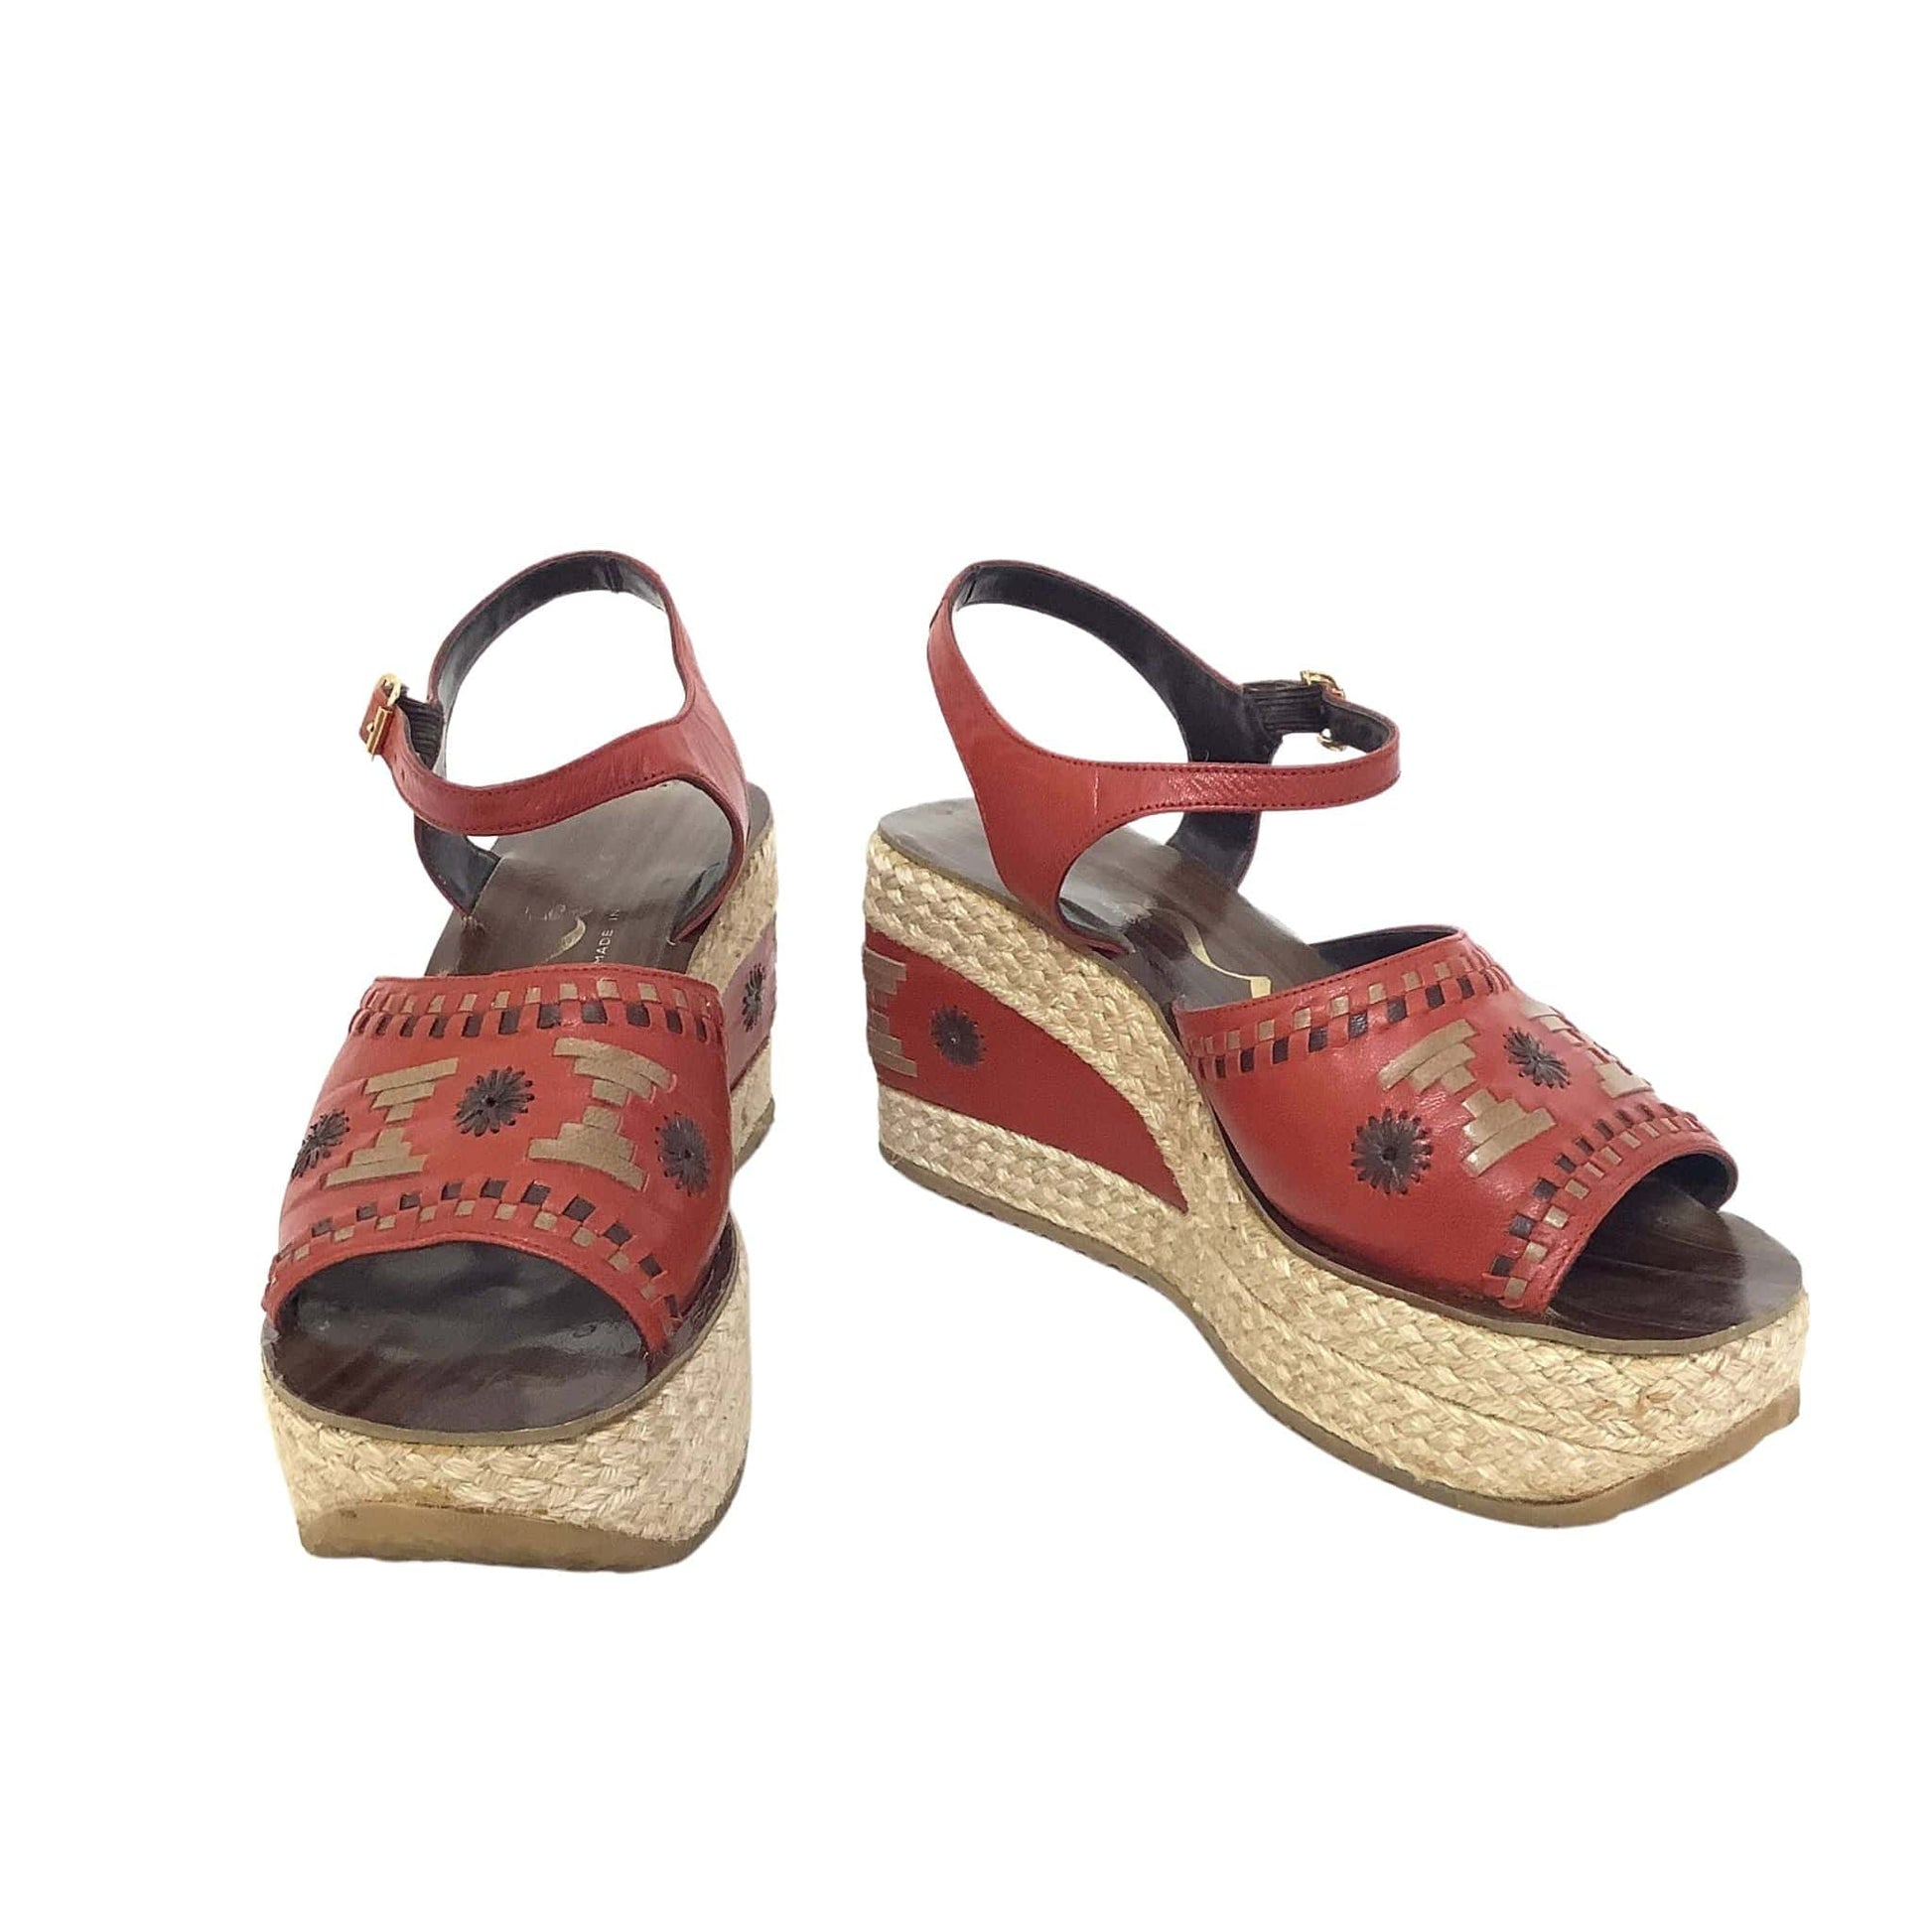 OAVQHLG3B Women's Boho Platform Sandals Slippers Shoes Comfy Sandals Casual  Comfortable Beach Sandals - Walmart.com